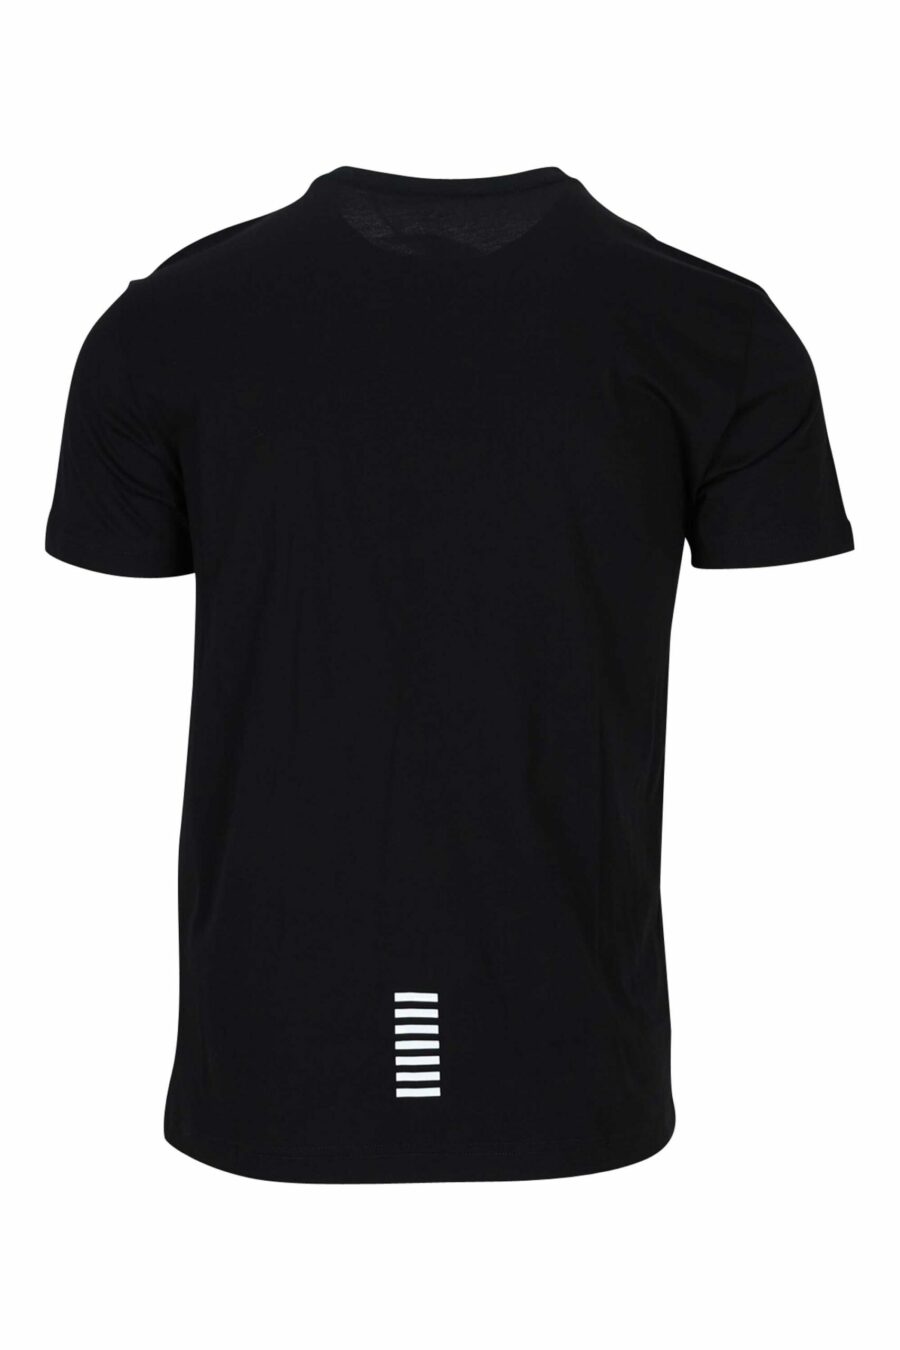 Camiseta negra con minilogo degradé "lux identity" blanco - 8055187167147 1 scaled